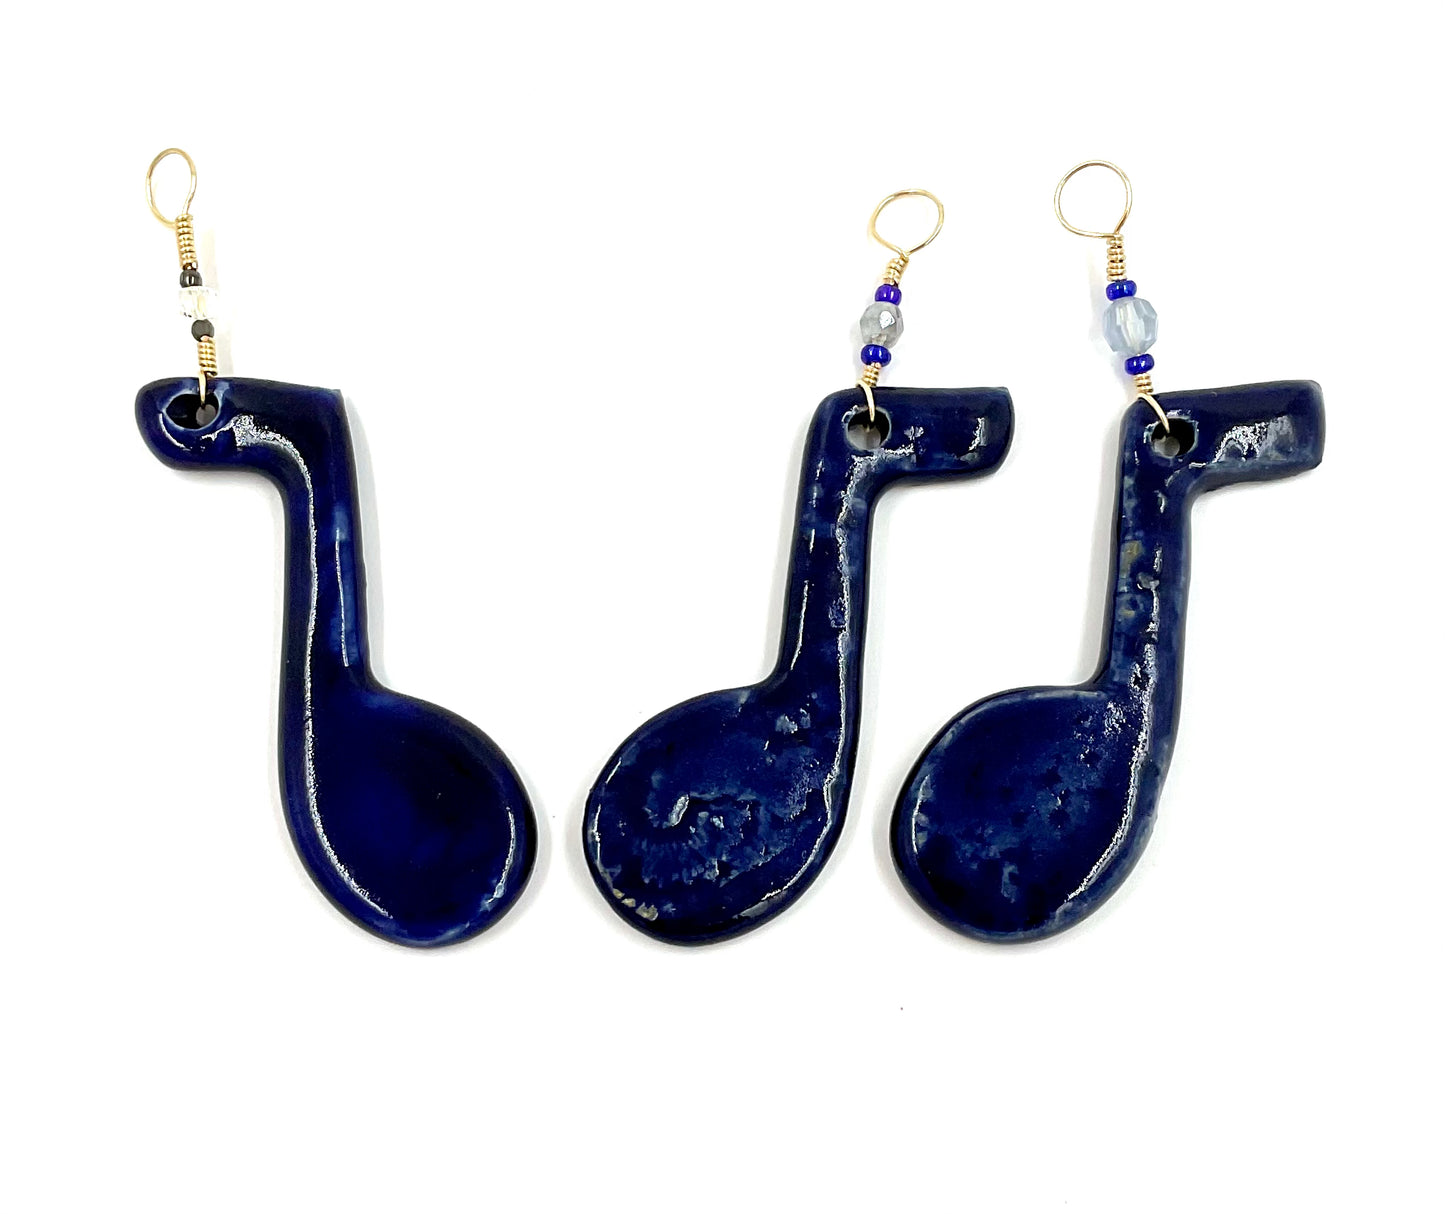 Blue Music Note Ornament